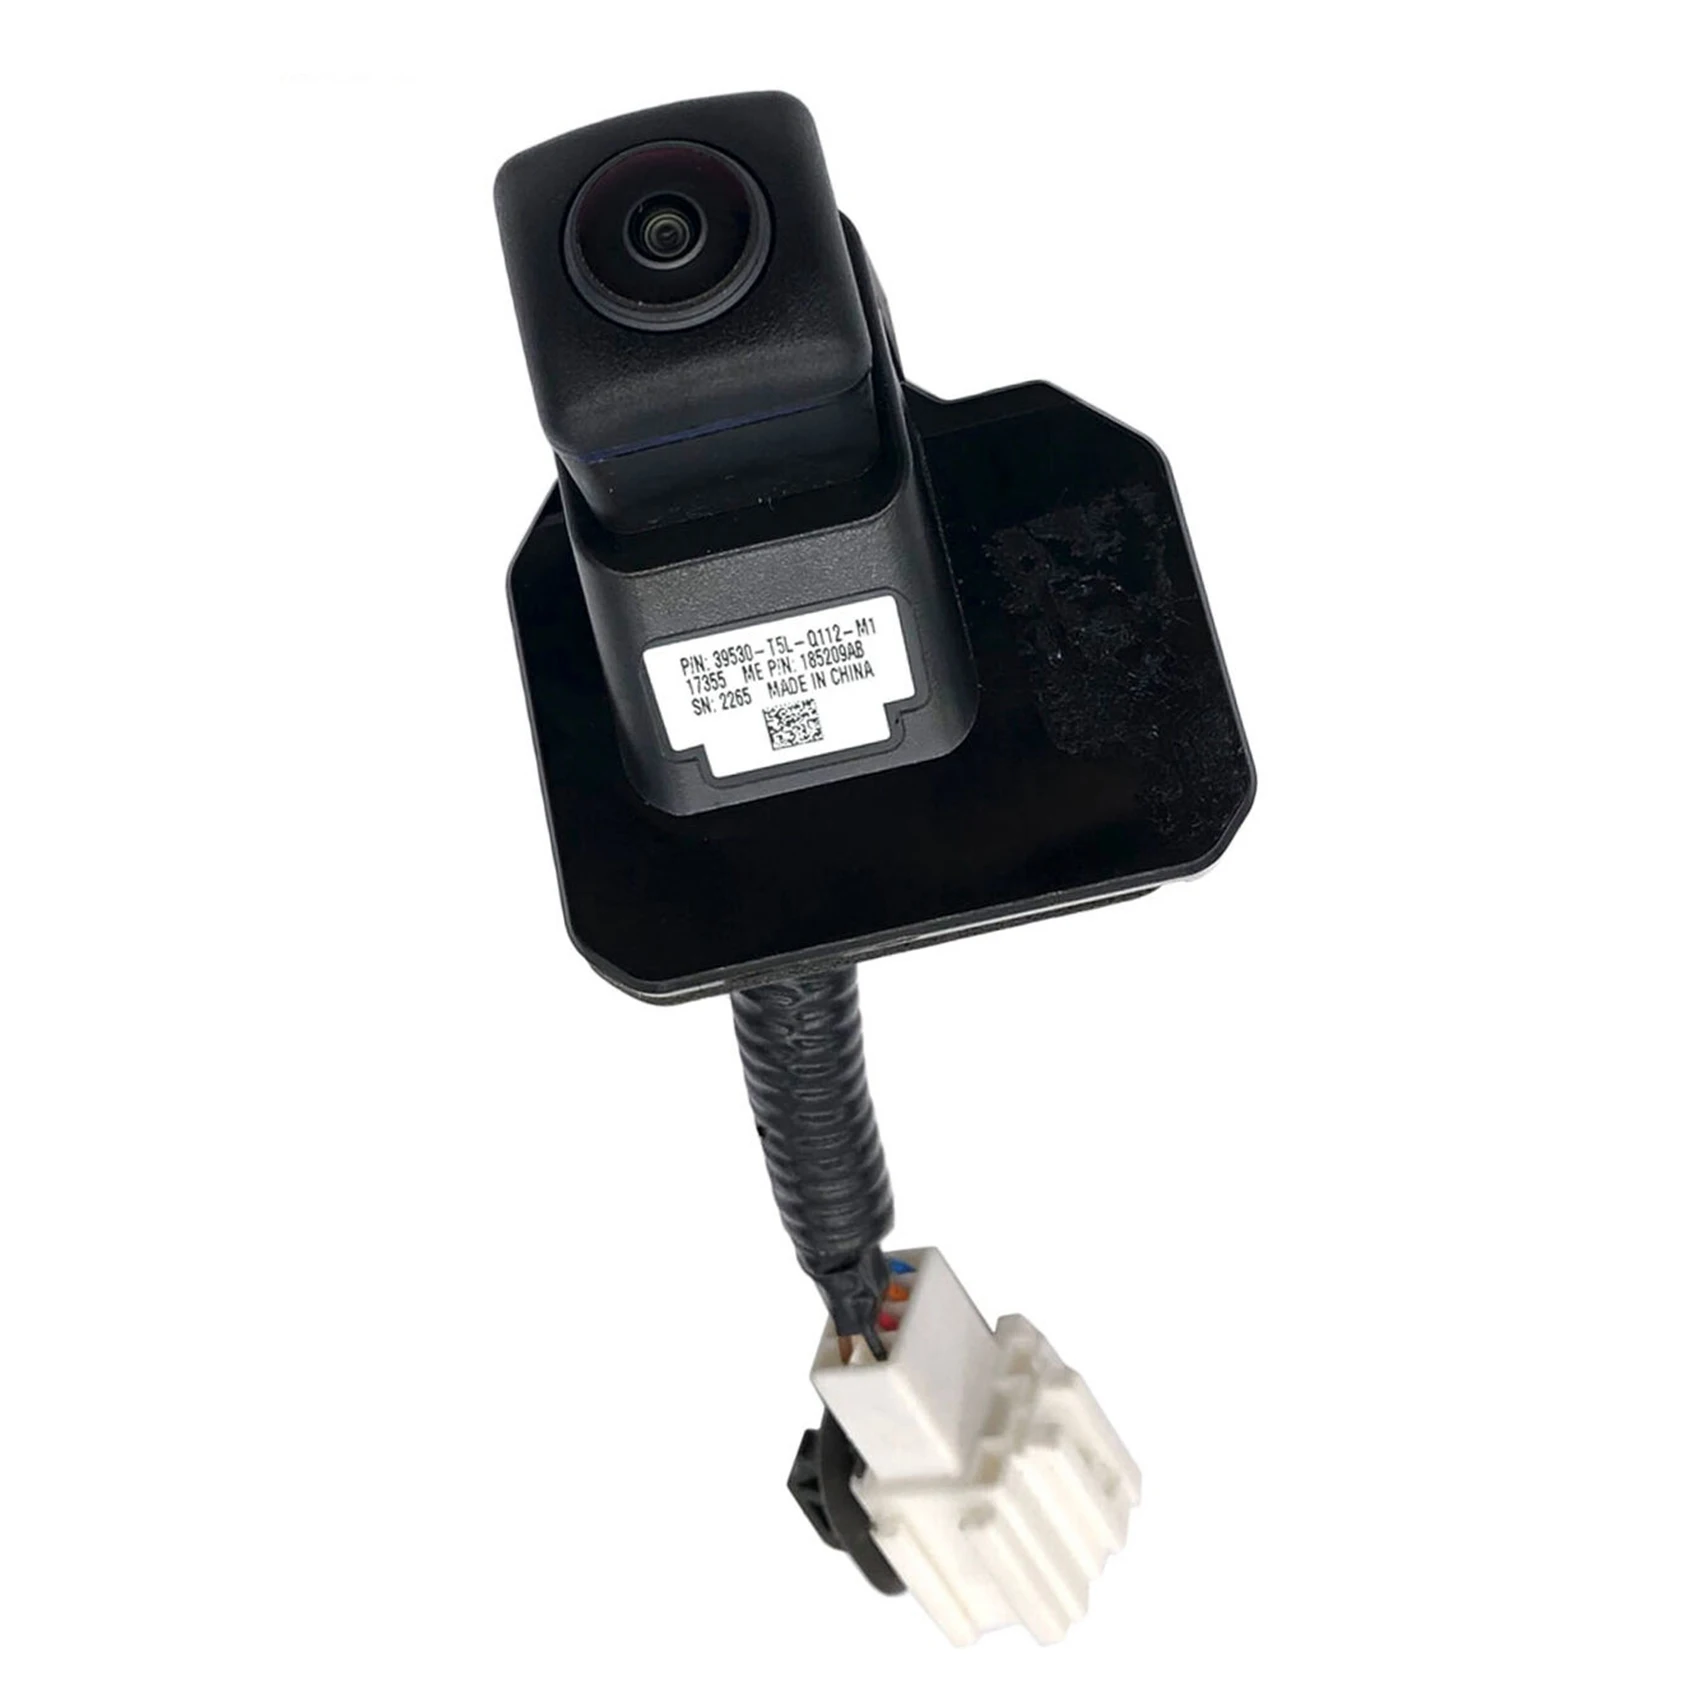 

39530-T5L-Q112-M1 Rear View Backup Parking Reverse Assist Camera for -Honda